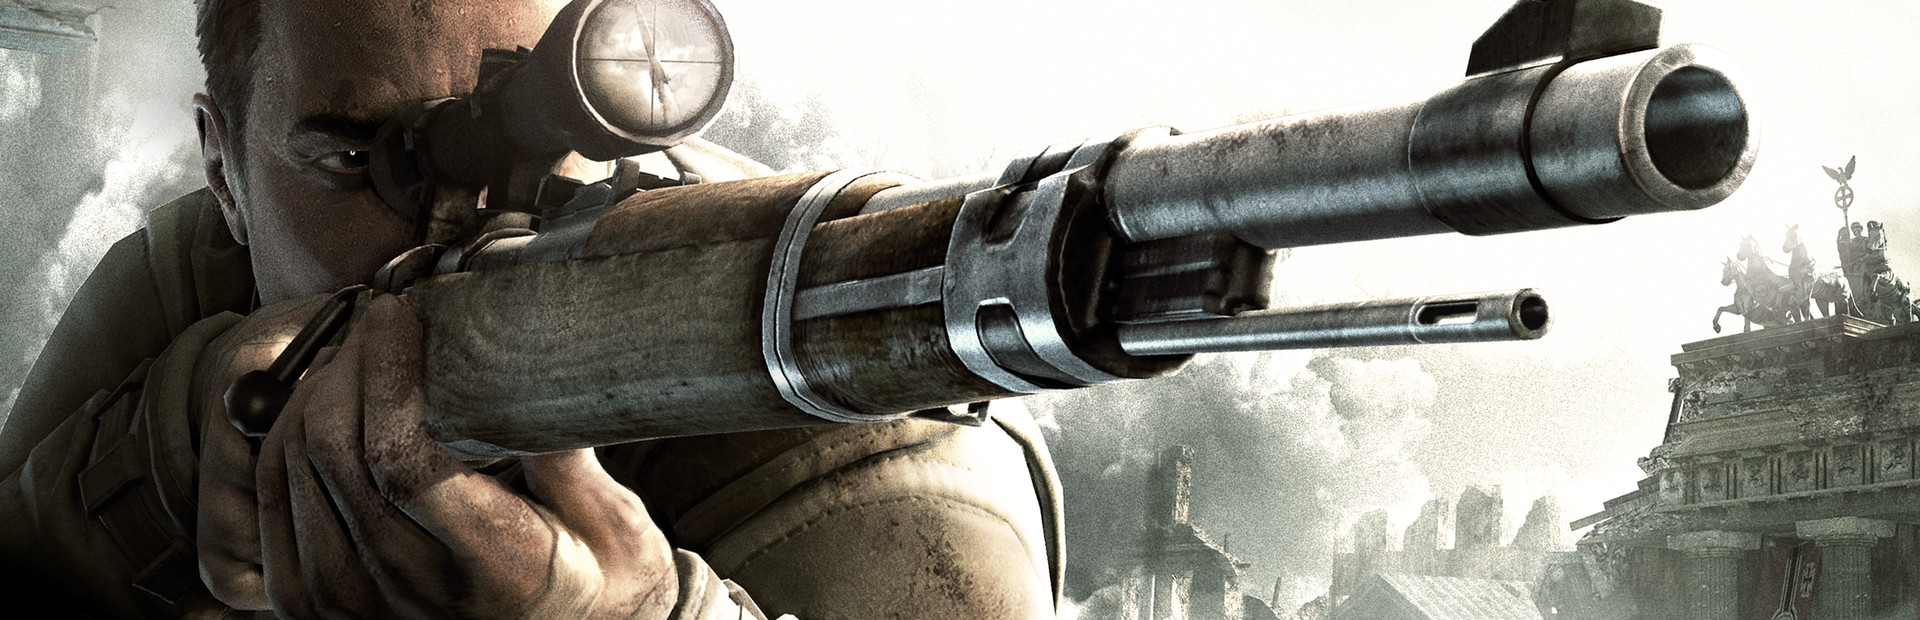 Sniper Elite V2 cover image